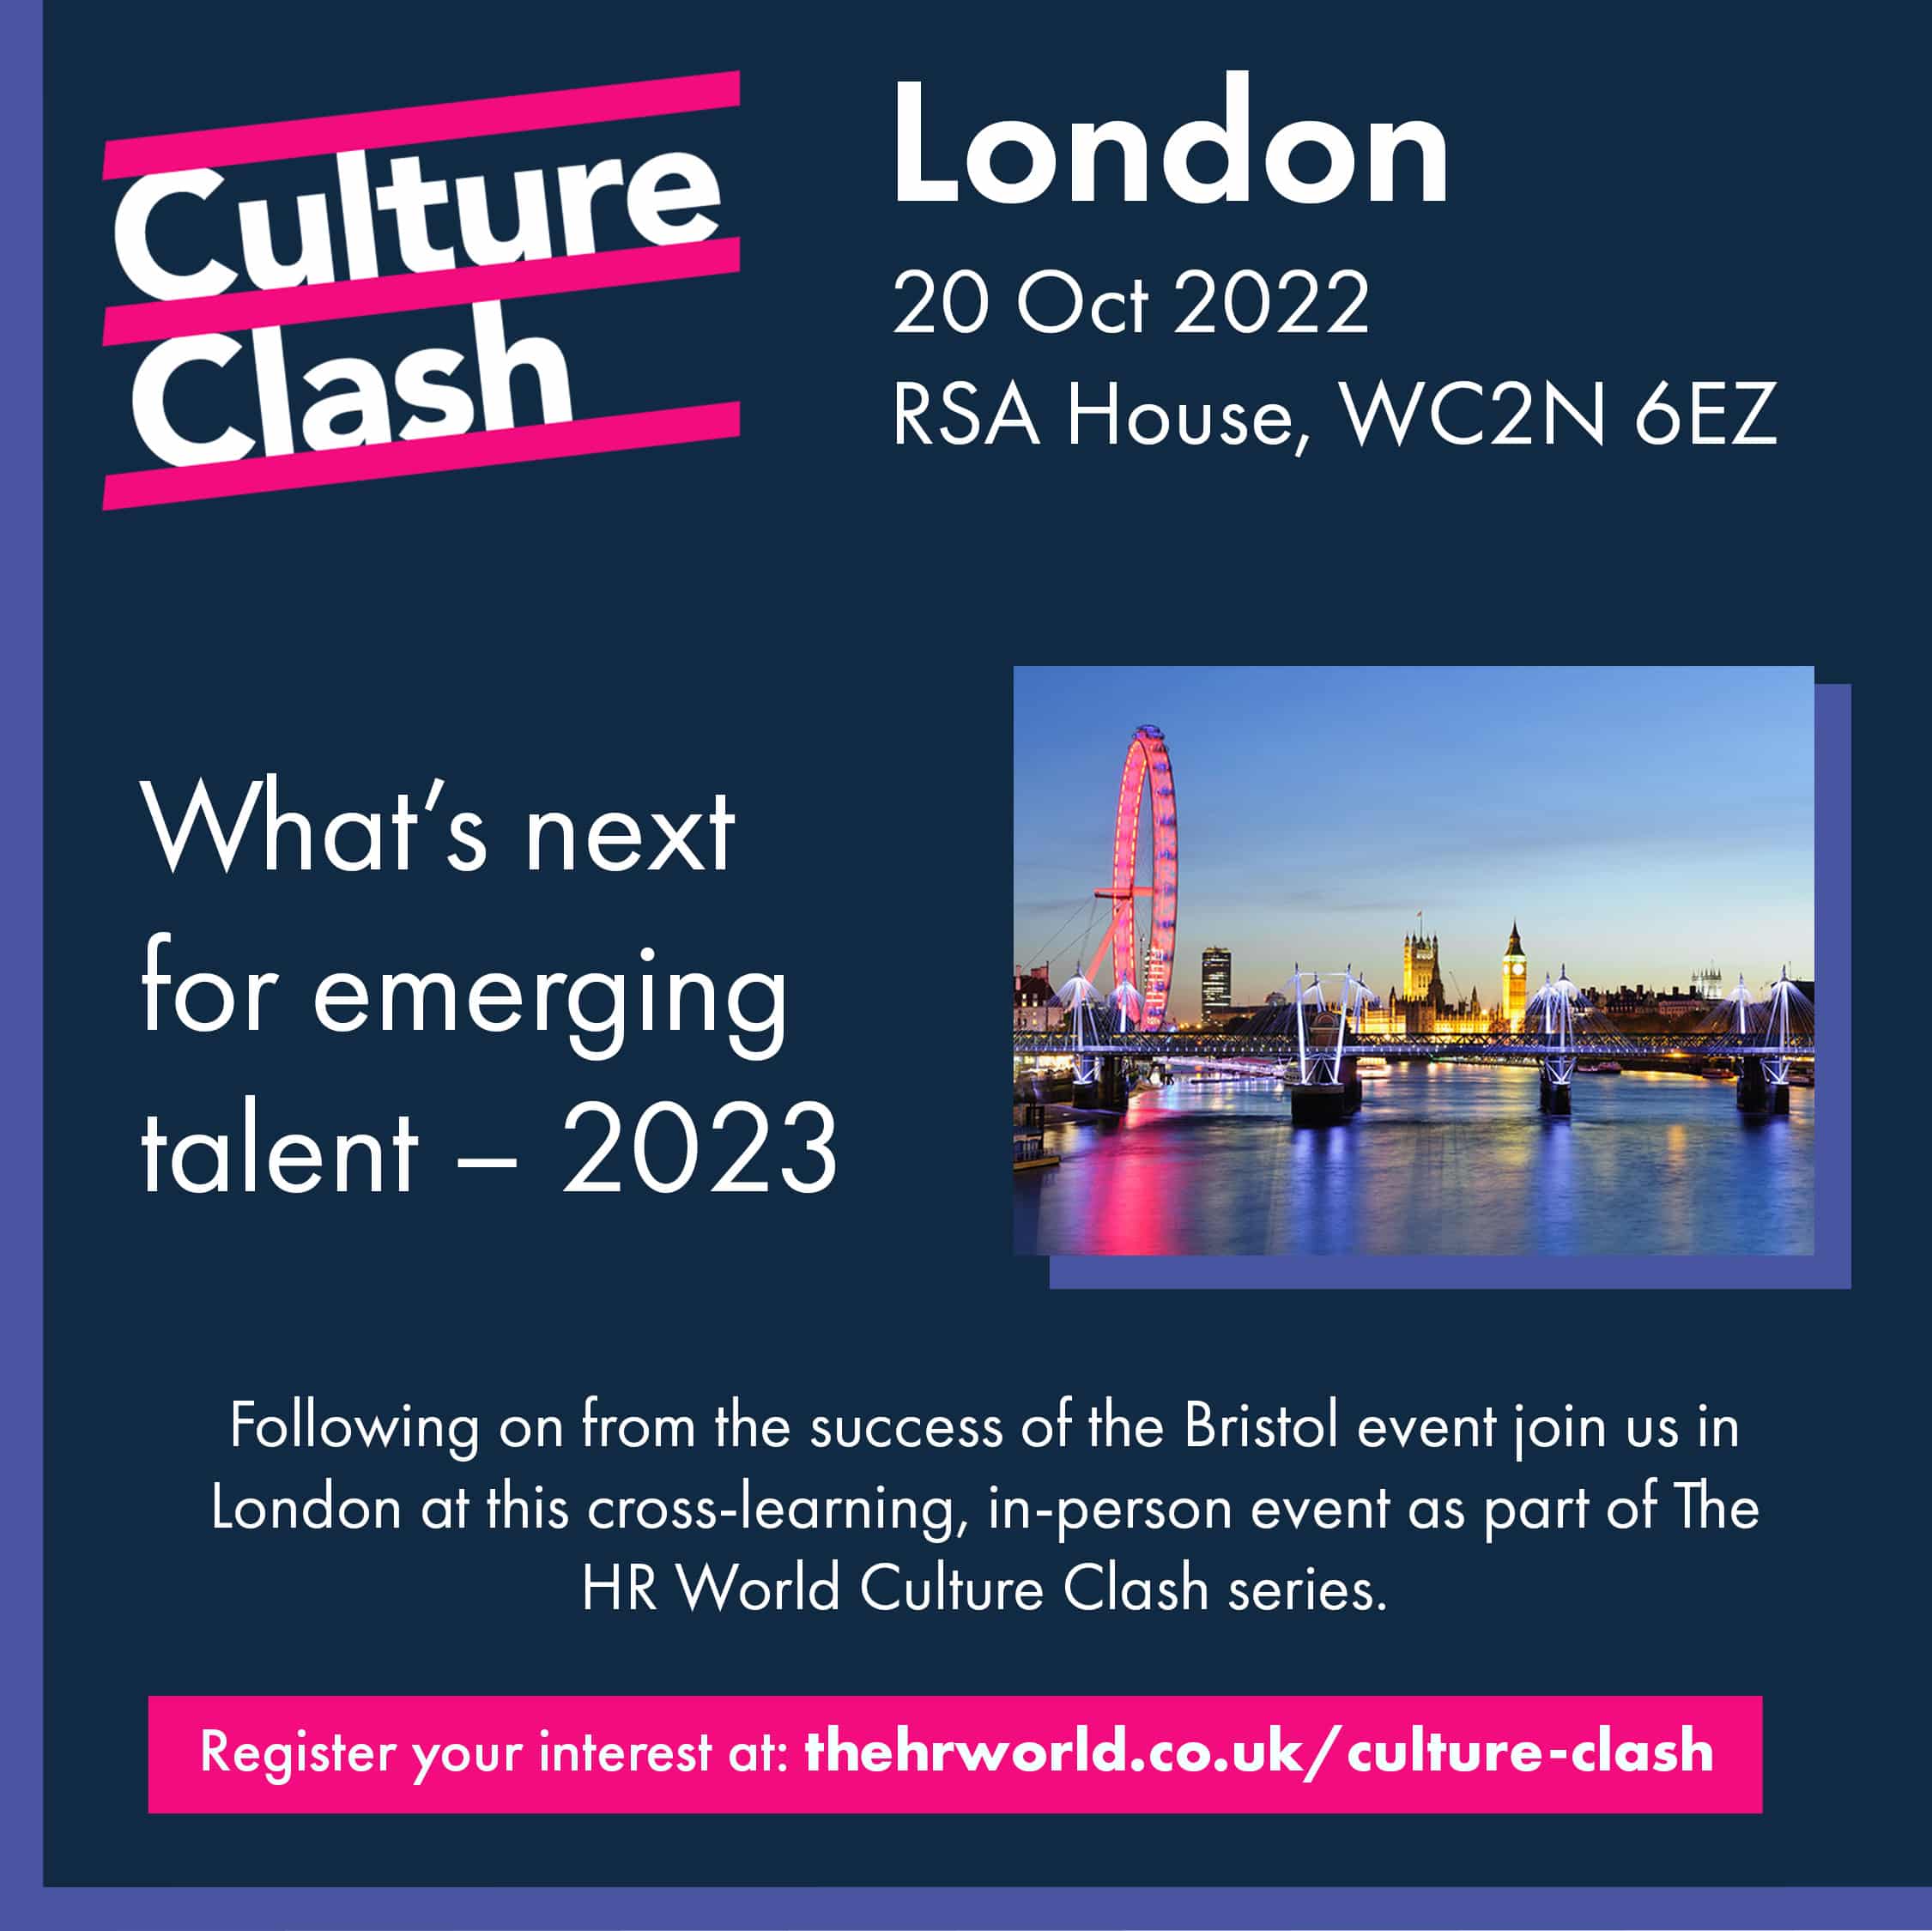 Culture Clash London 20 Oct